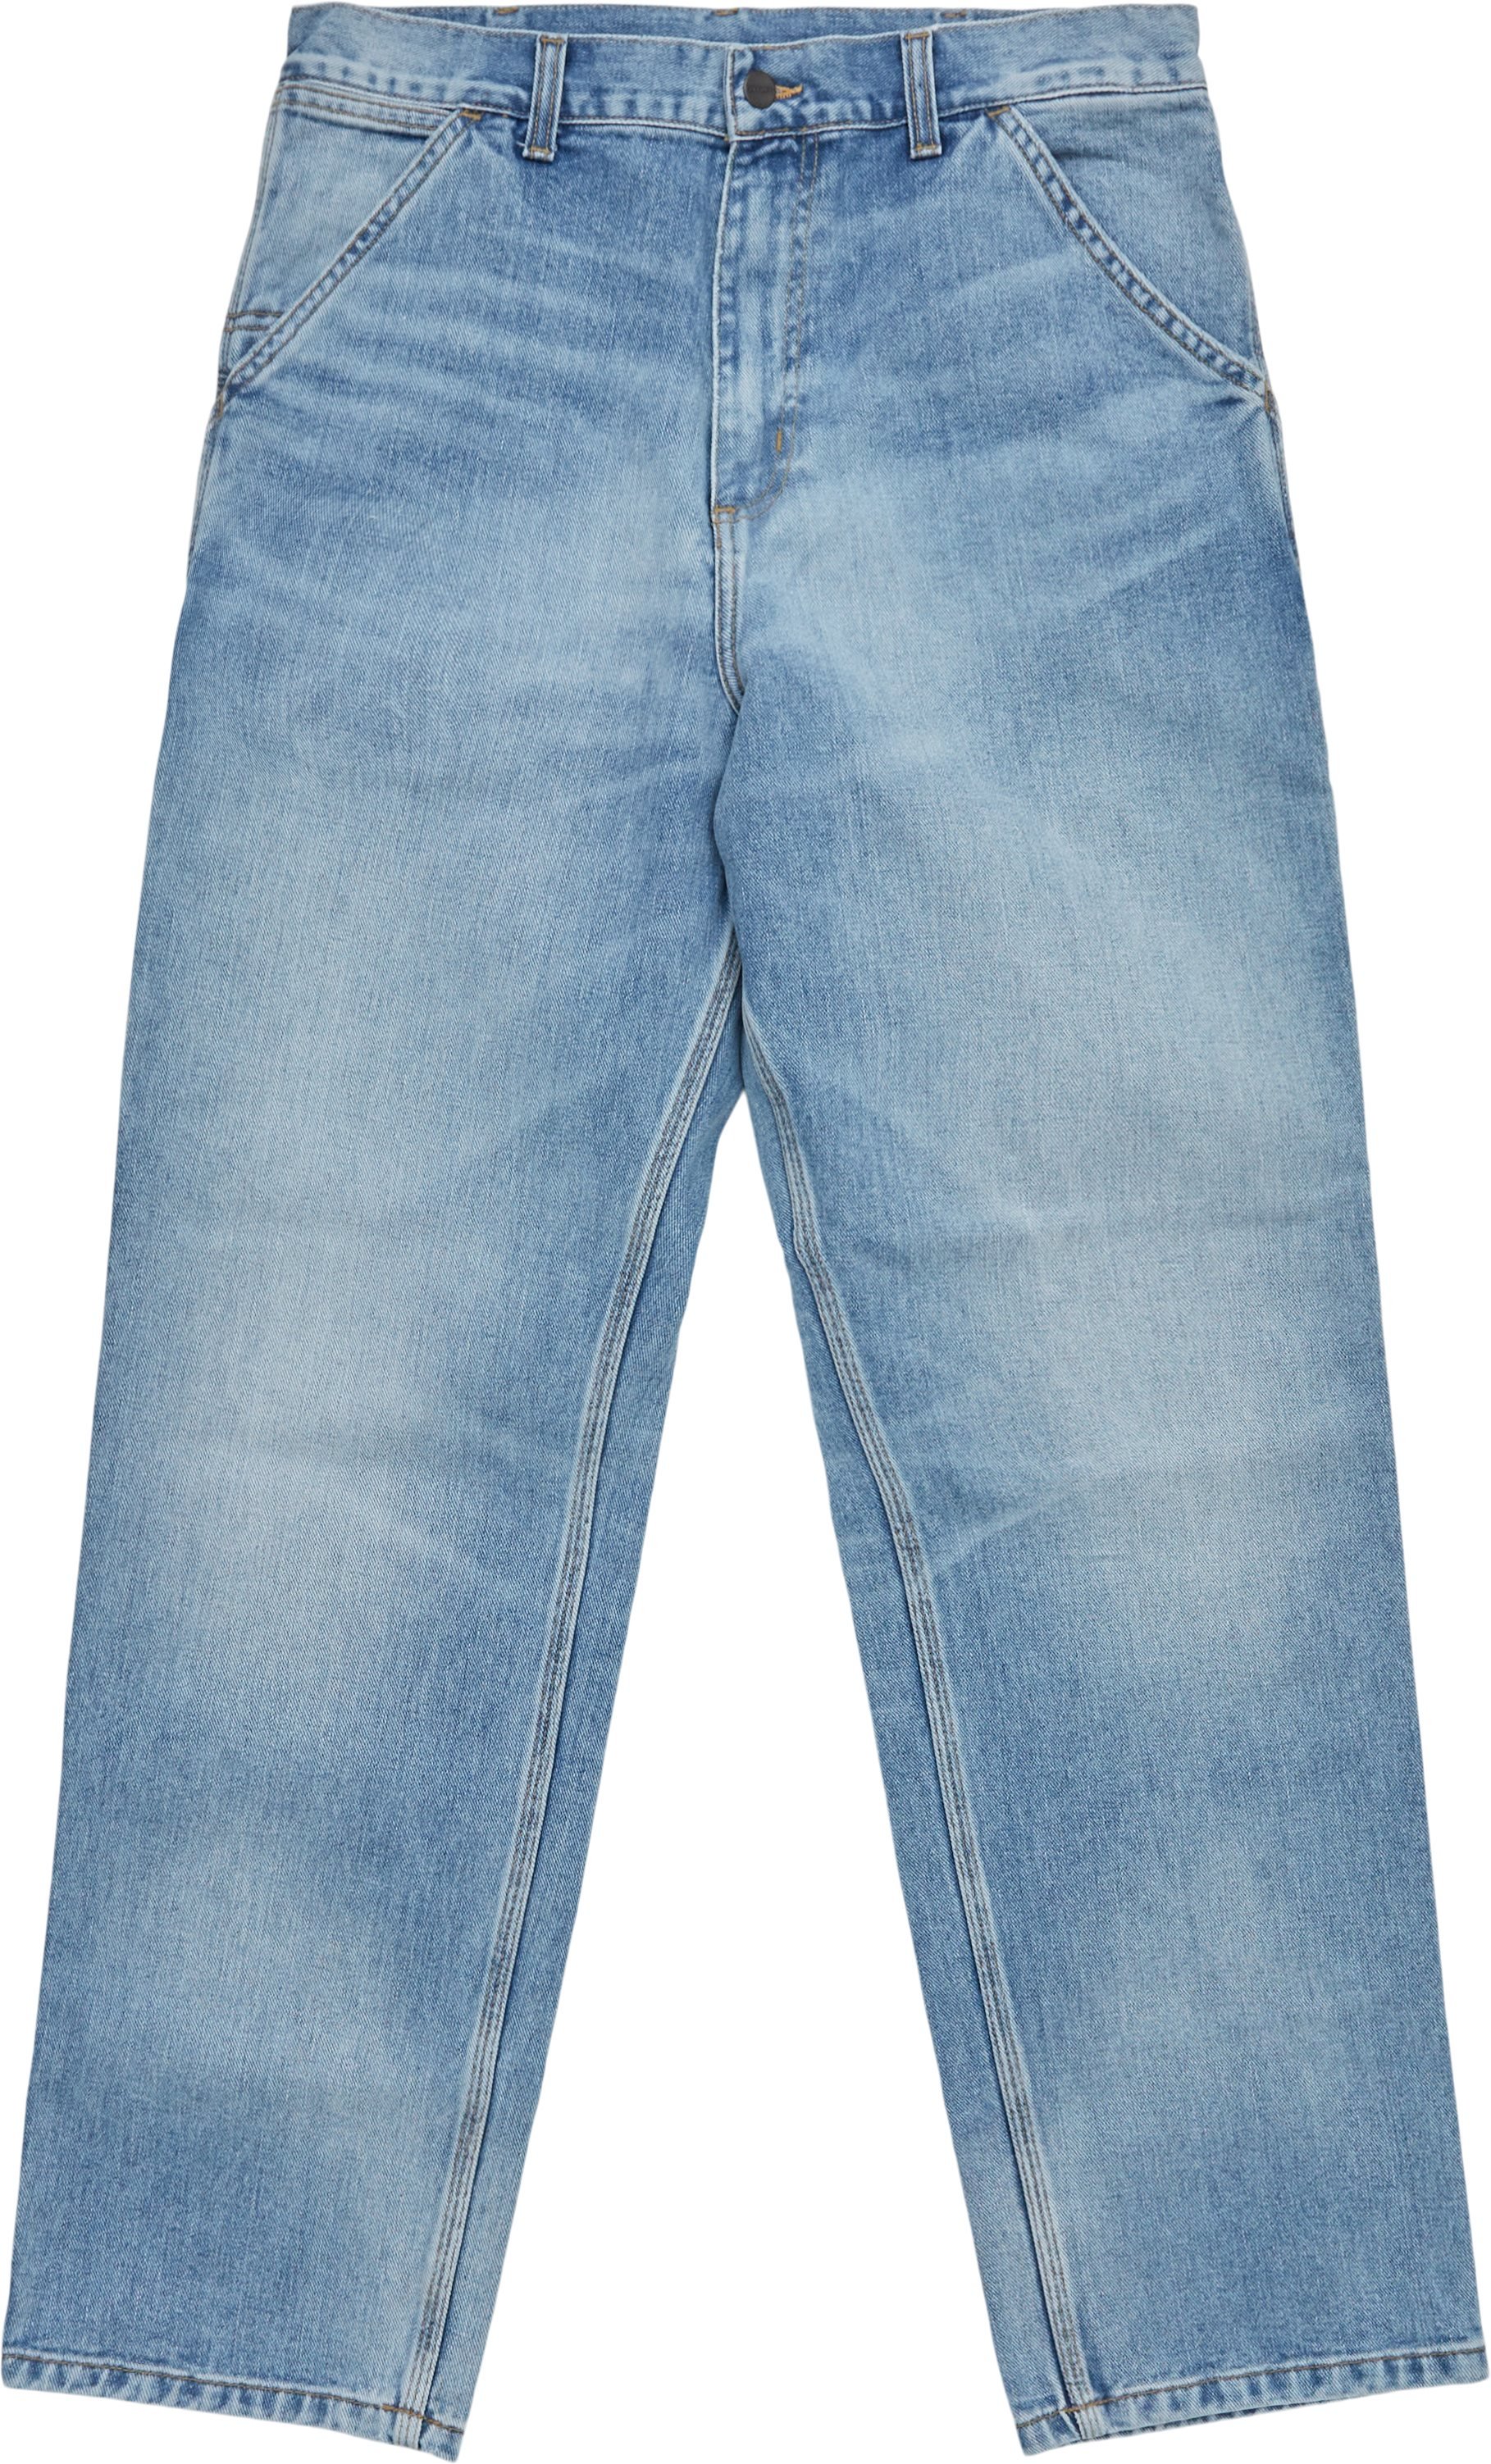 Carhartt WIP Jeans SINGLE KNEE PANT I031245.01WI Denim